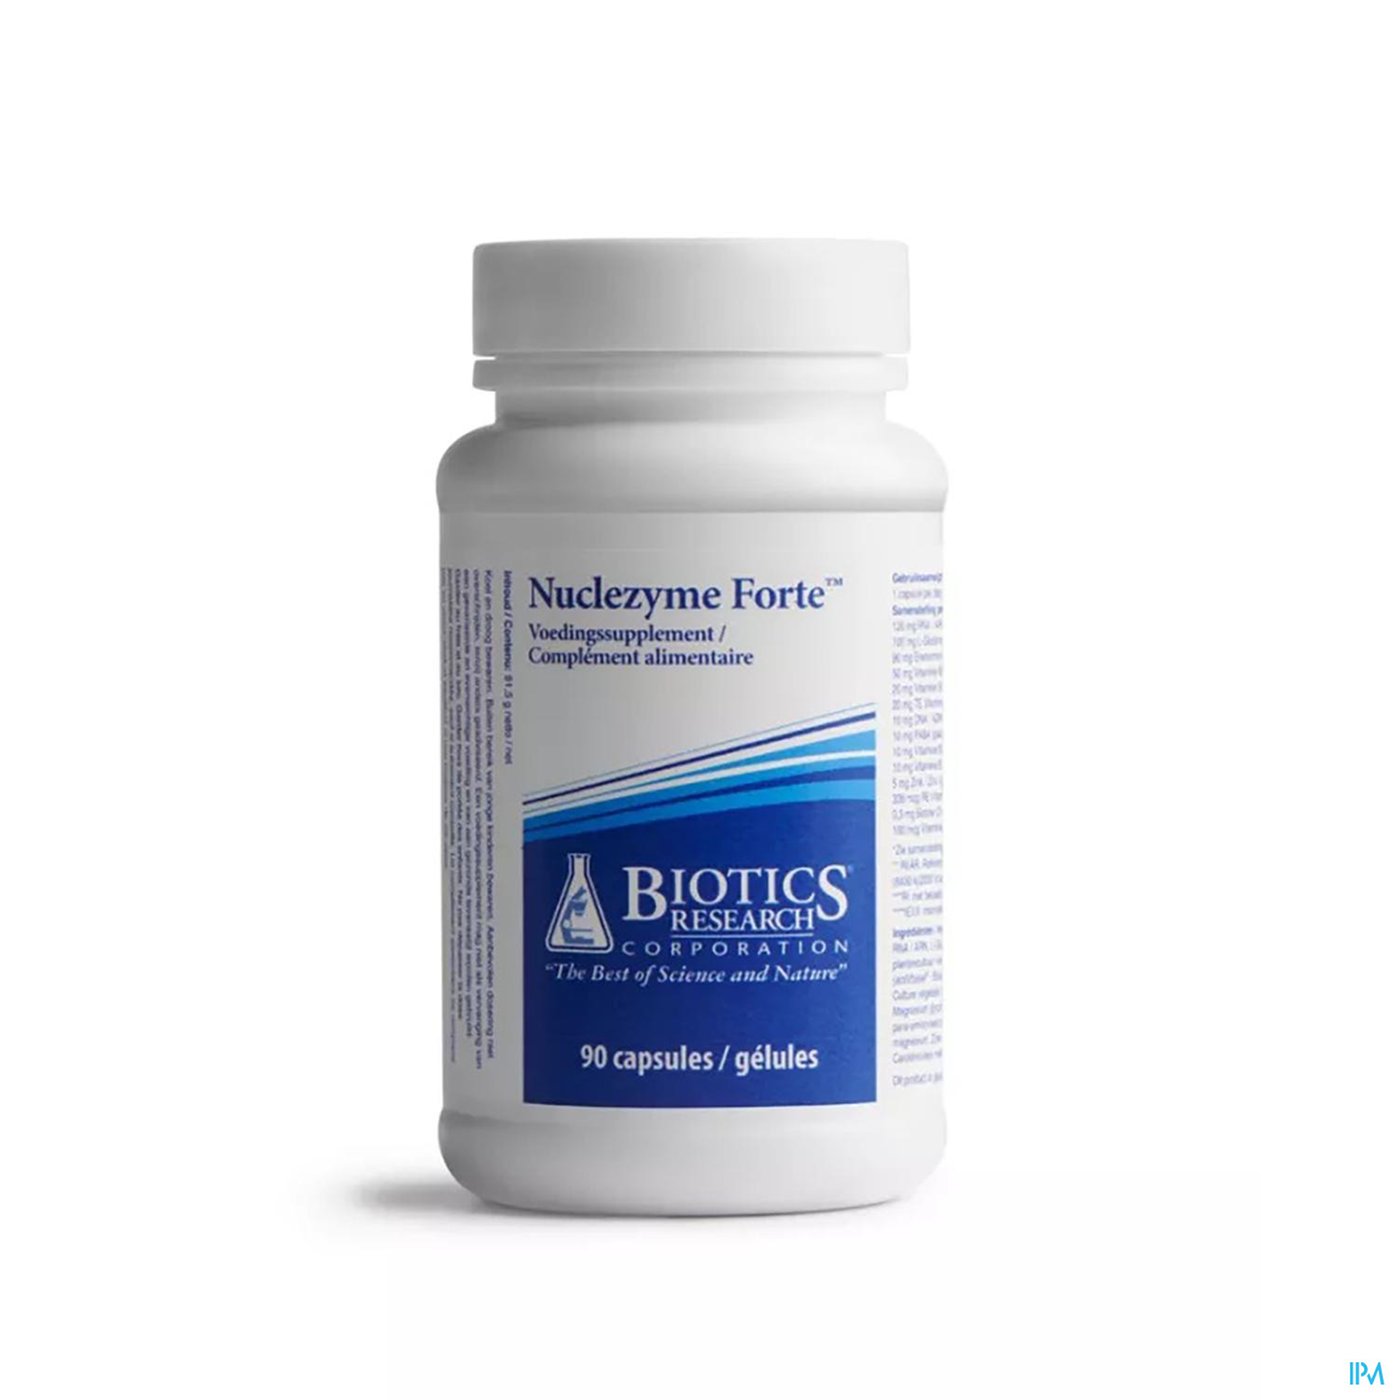 Nuclezyme Forte Biotics Caps 90